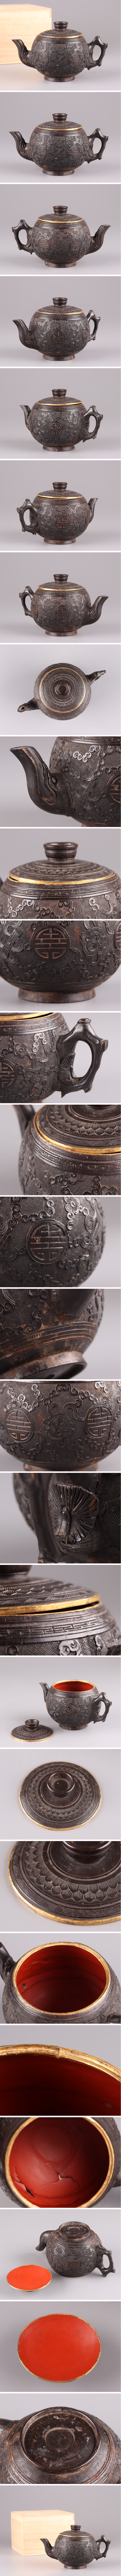 【仕入れ】中国古玩 唐物 煎茶道具 椰子実彫刻 急須 古作 時代物 極上品 初だし品 3817 その他